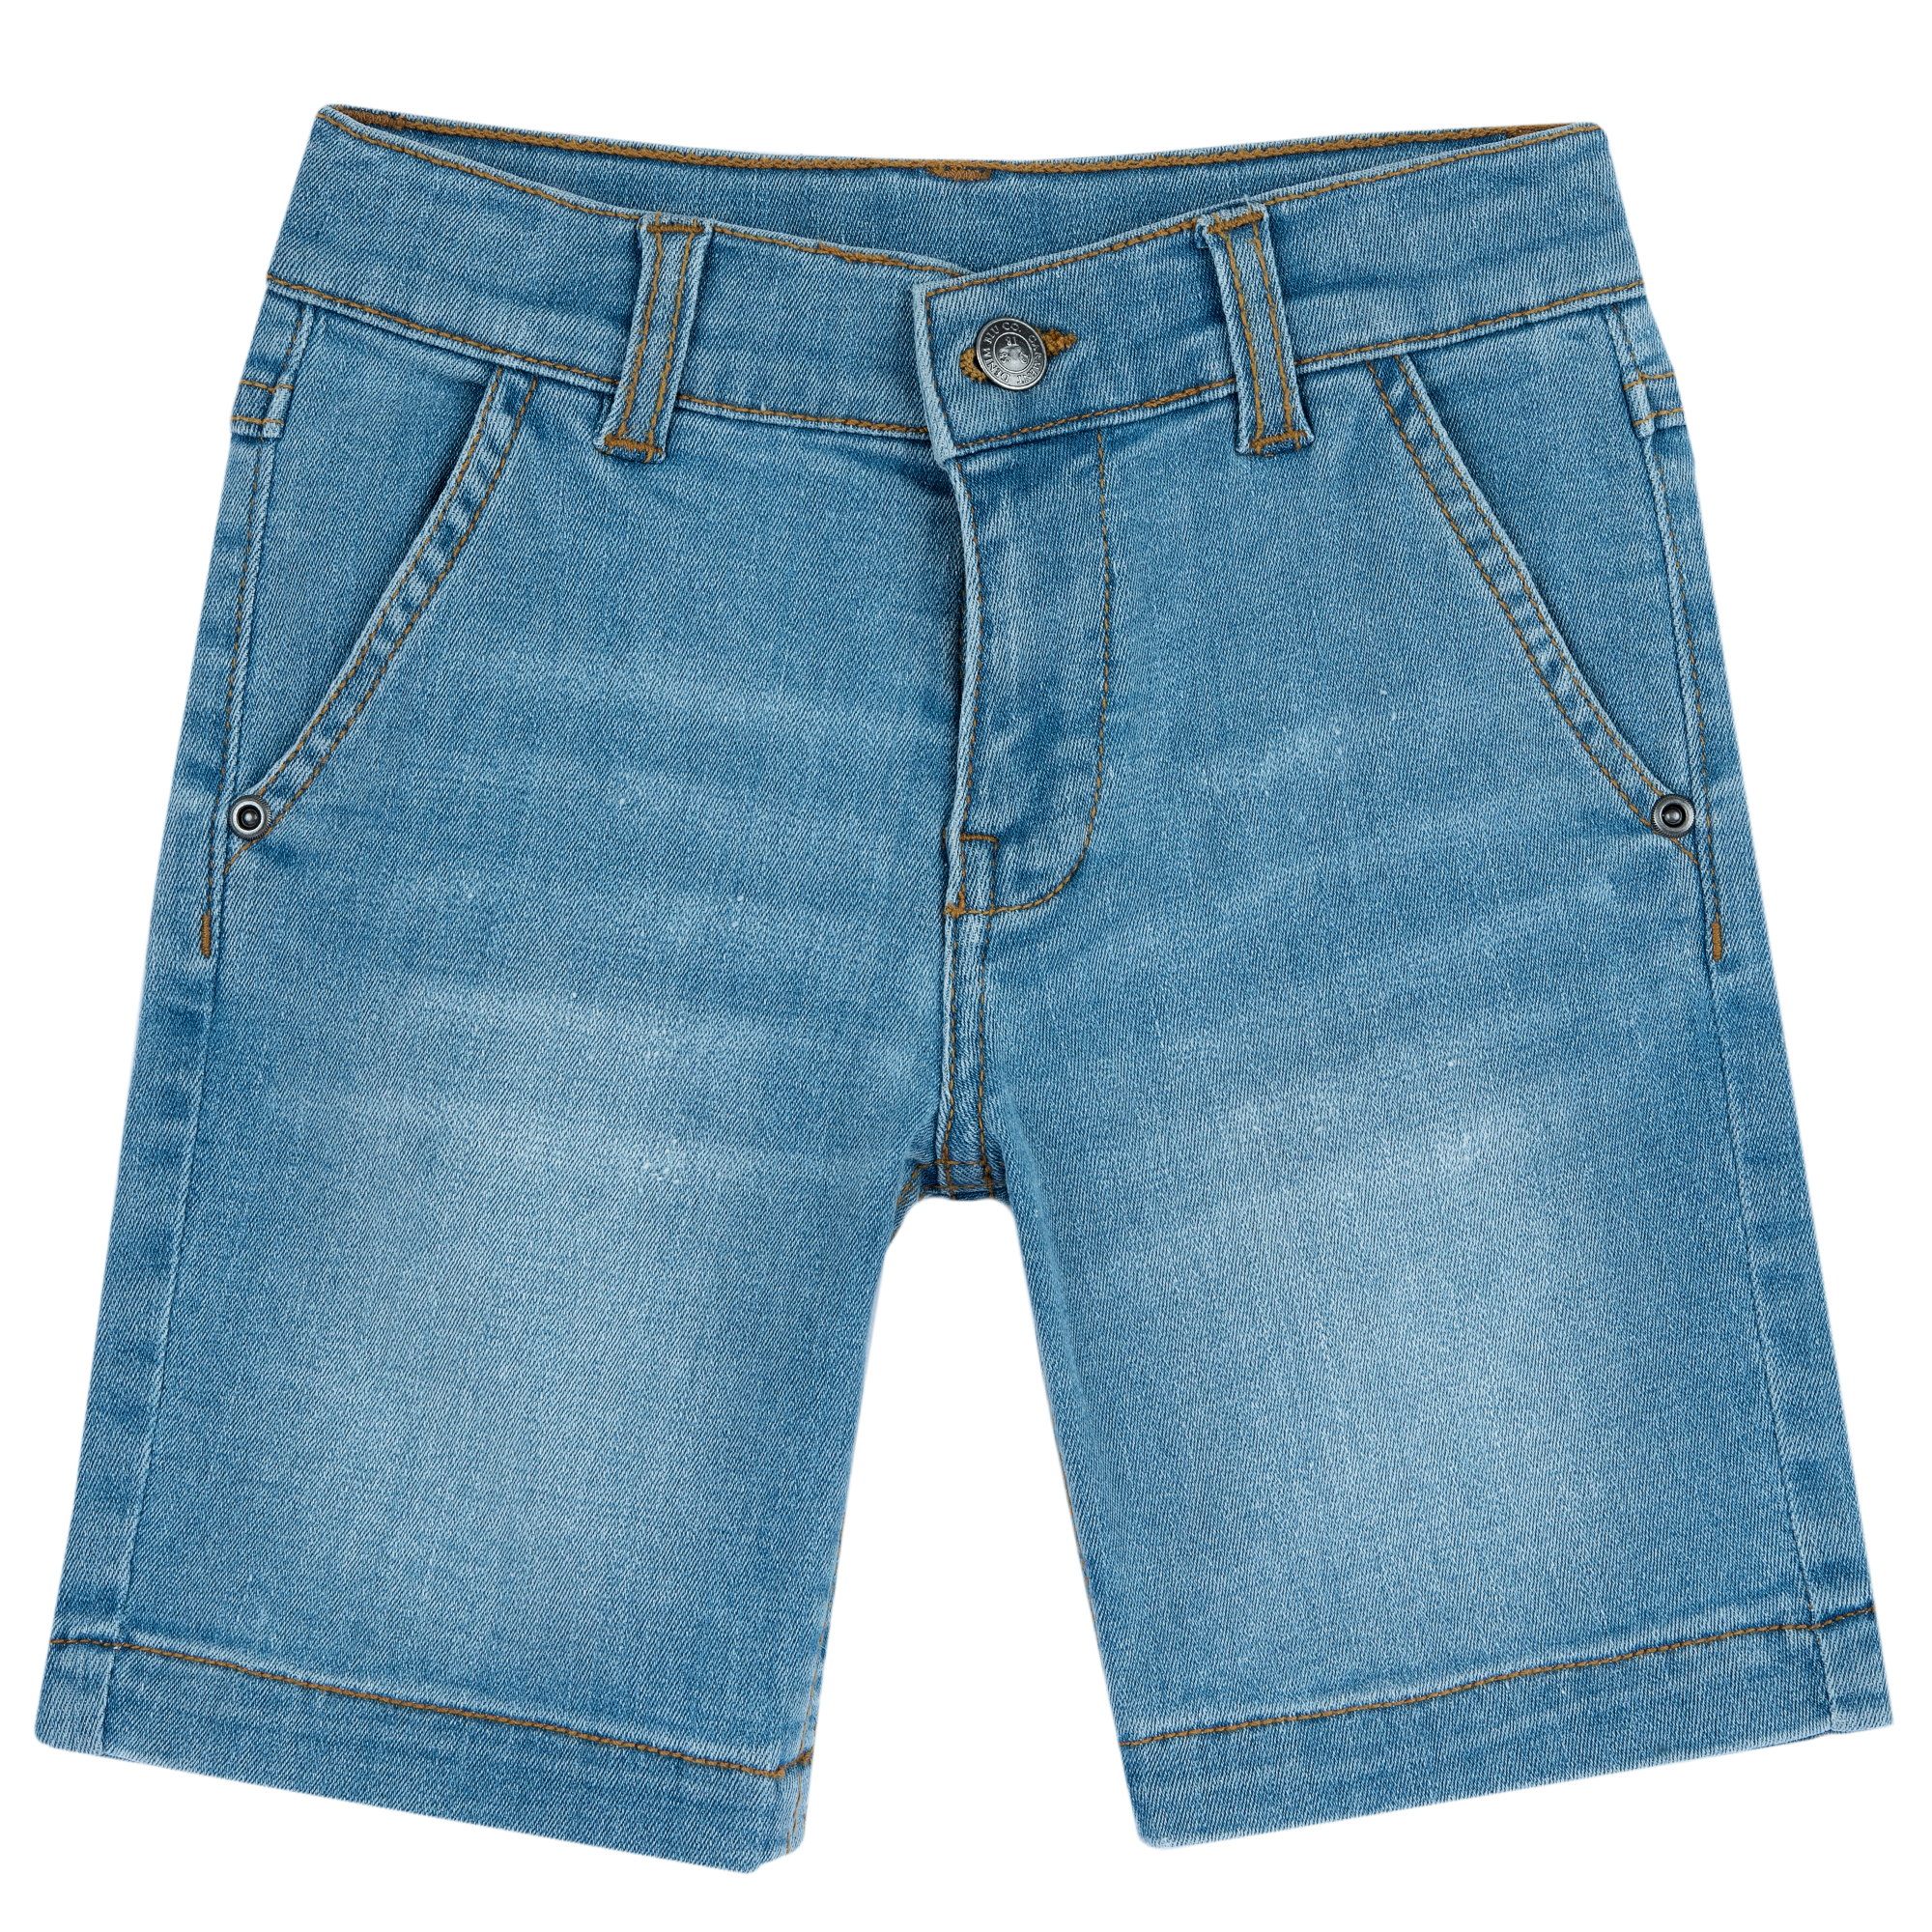 Pantaloni Scurti Copii Chicco, Albastru, 05780-66mc